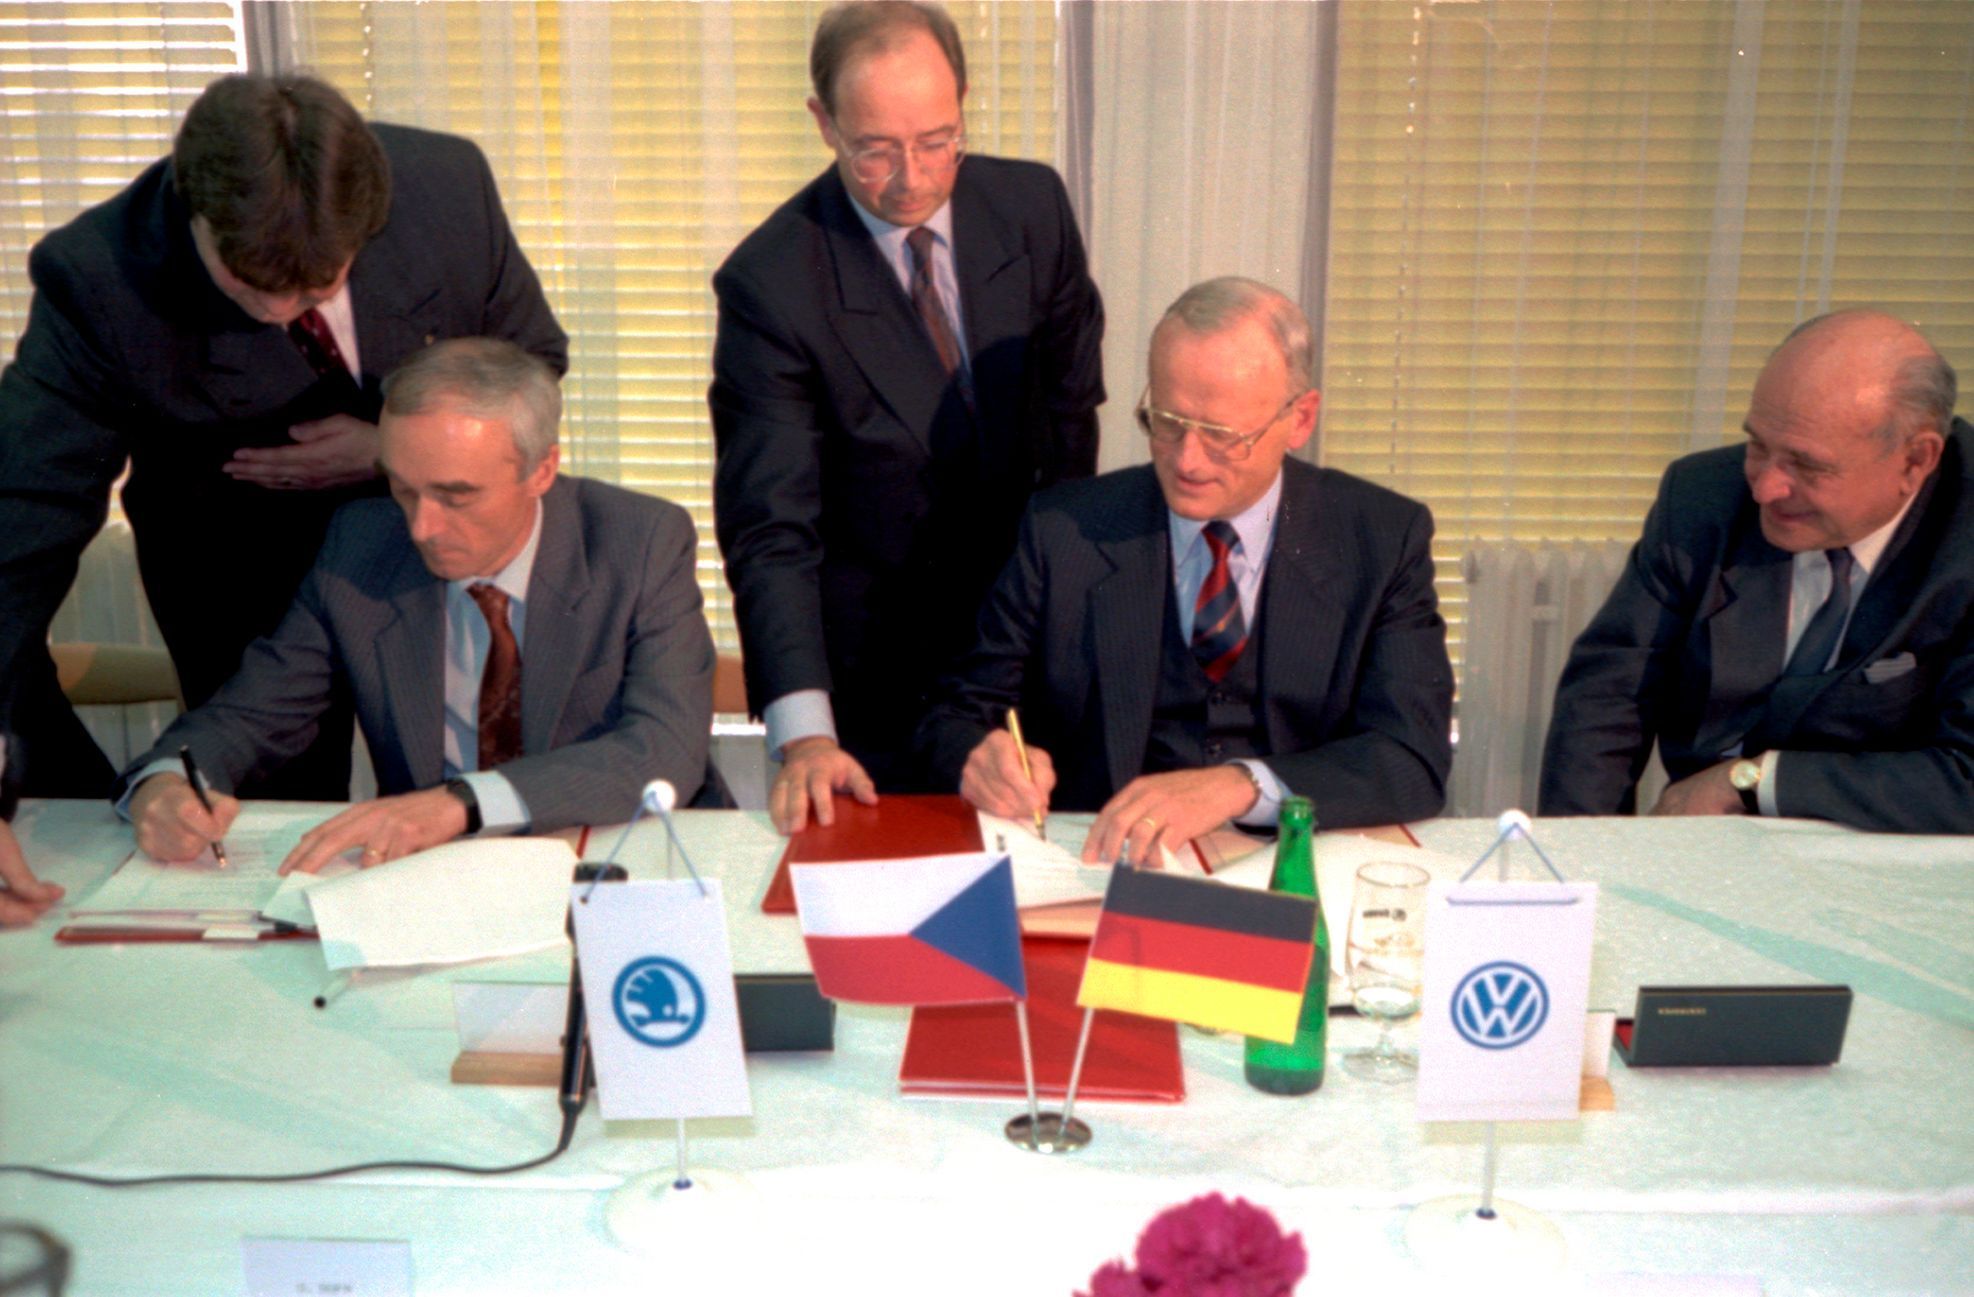 Podpis smlouvy Škoda - Volkswagen